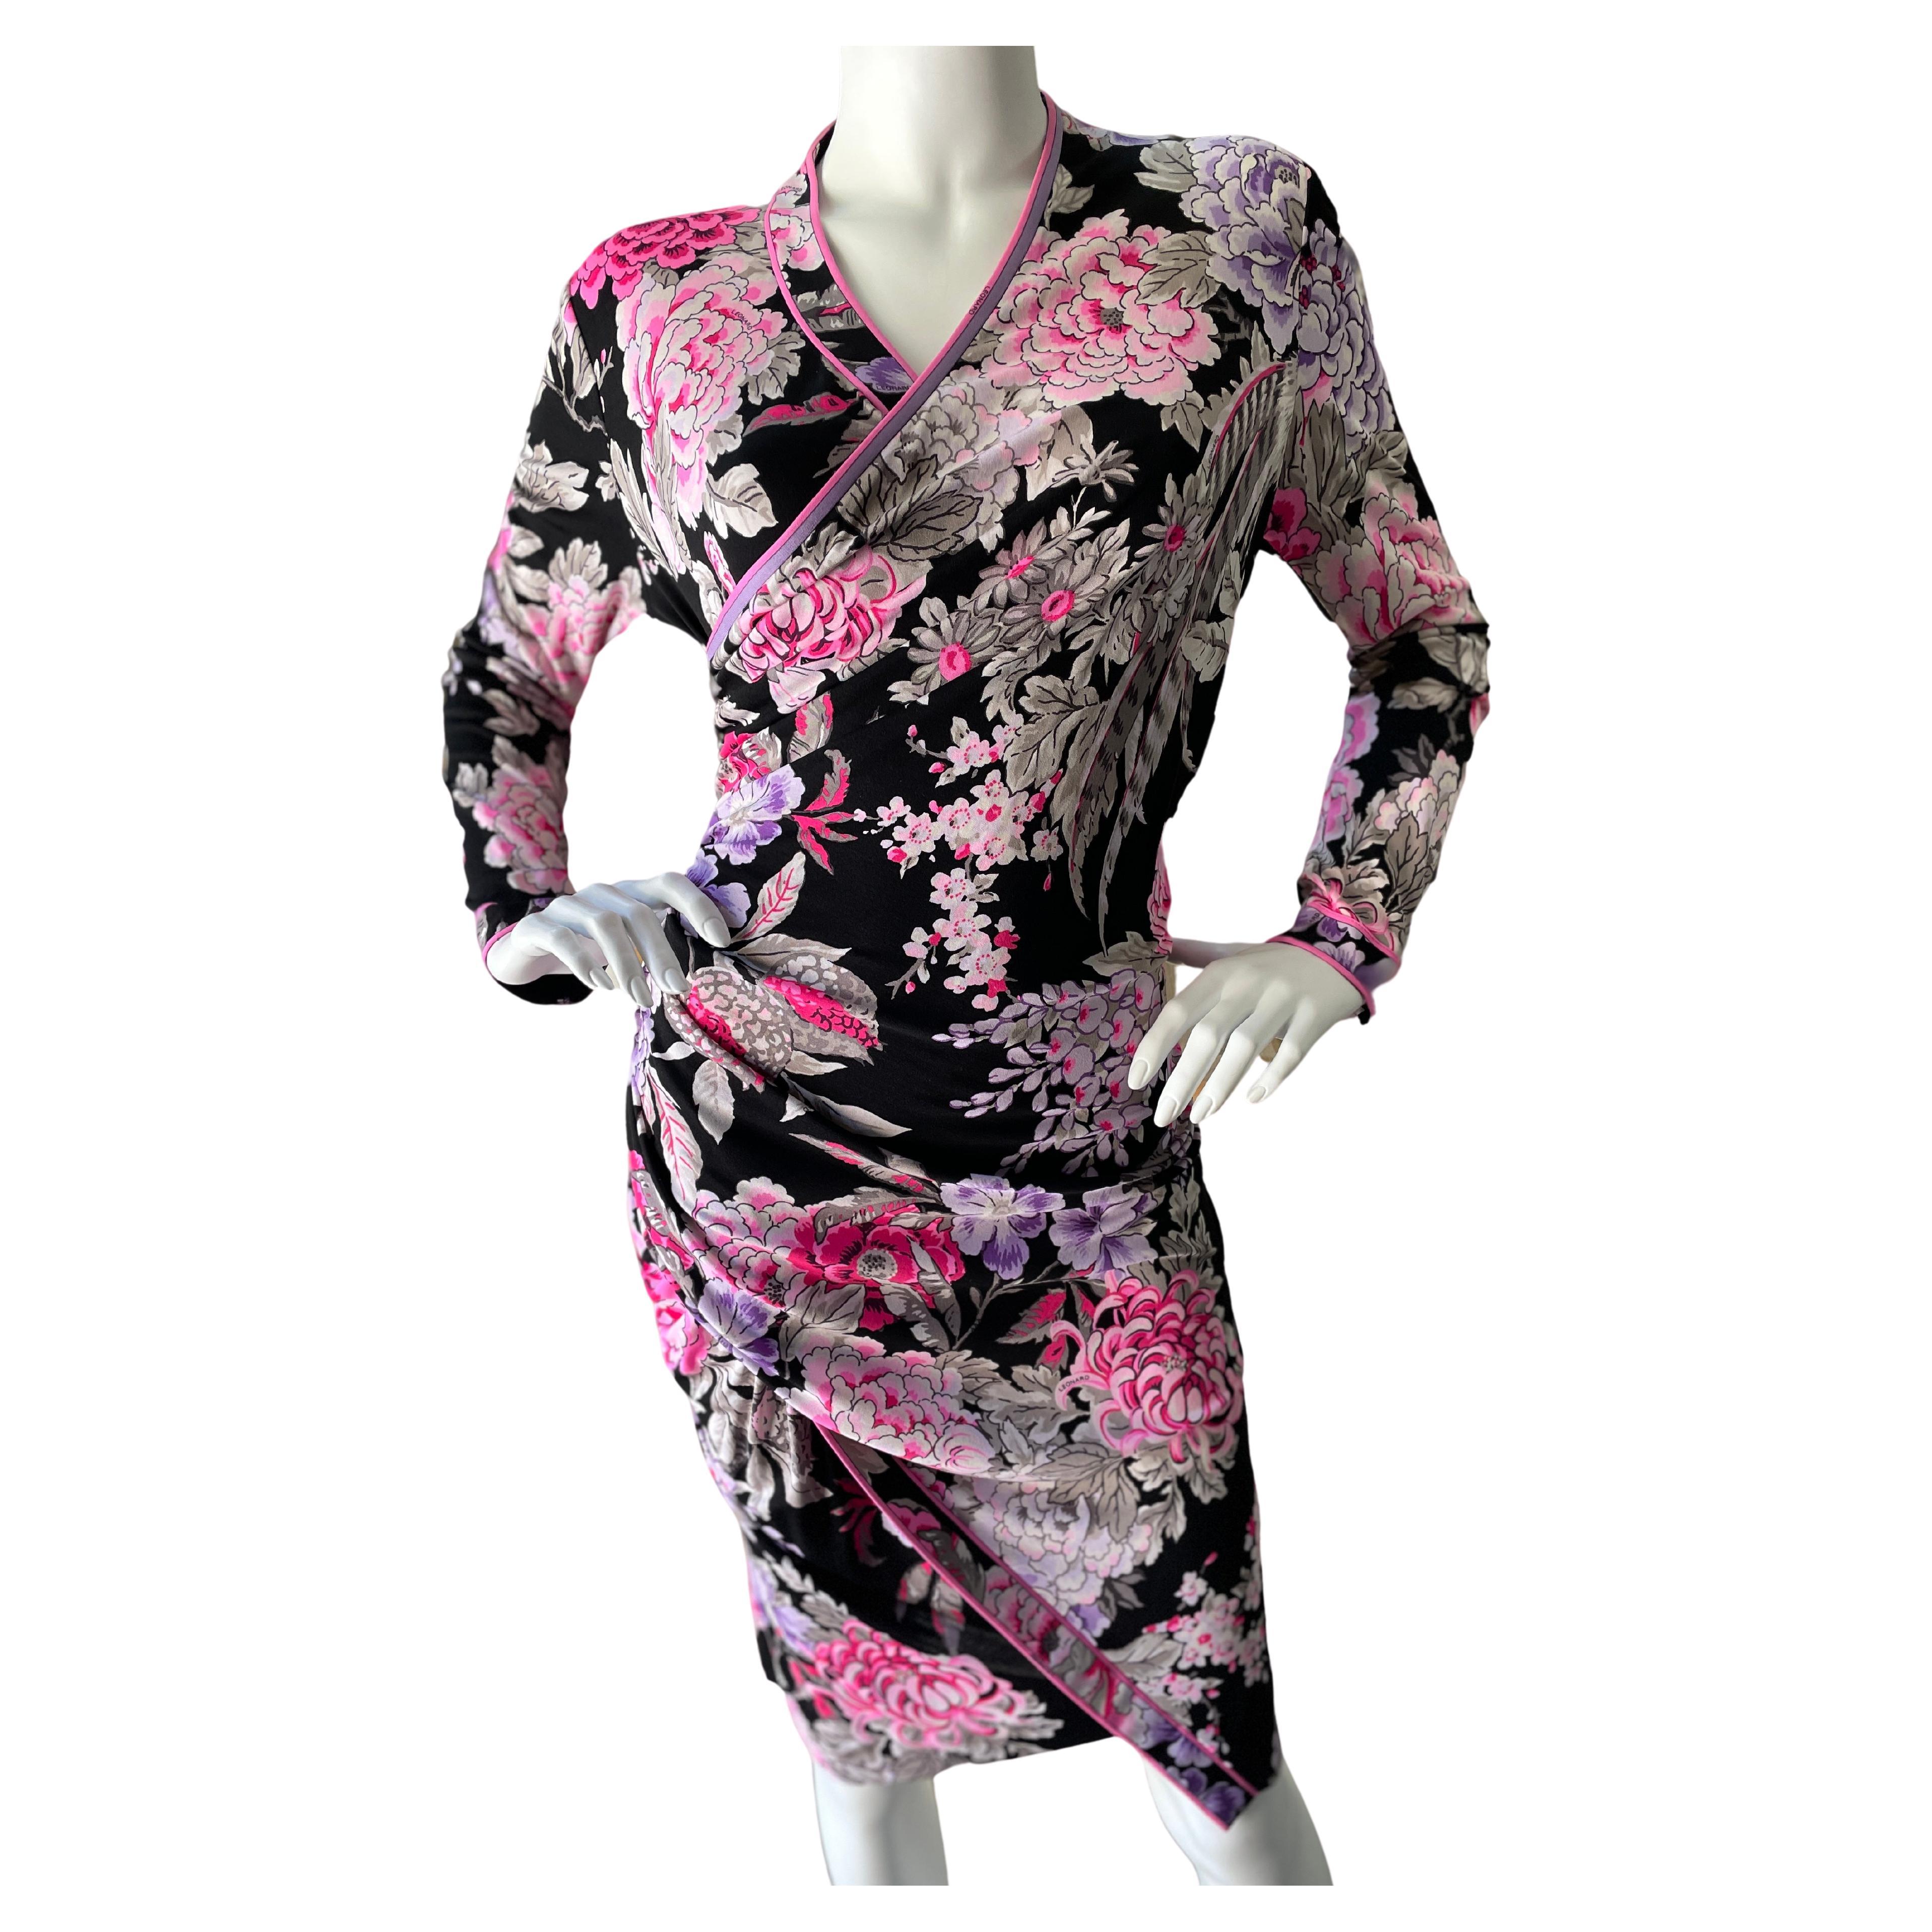  Leonard Paris Vintage 80s Long Sleeve Floral Print Silk Jersey Dress  For Sale